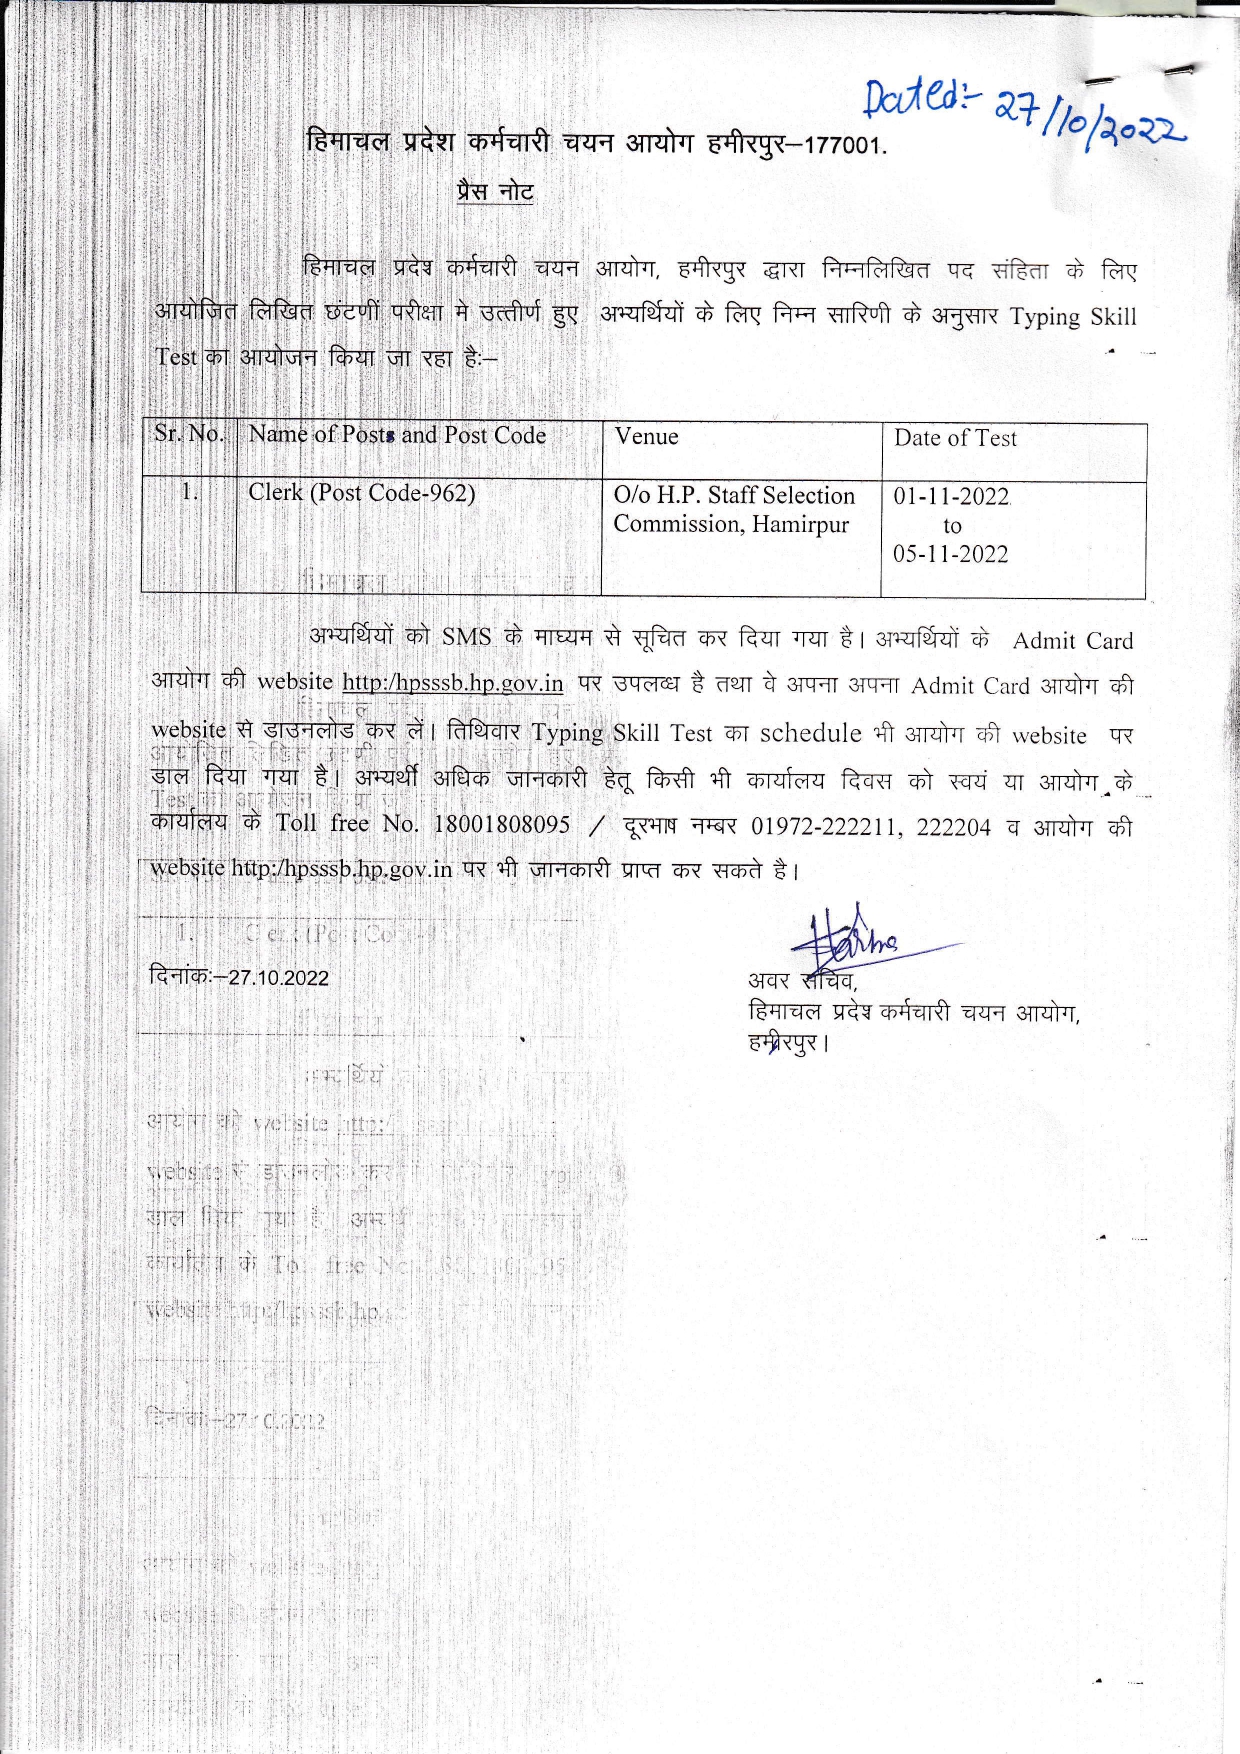 Important Notice For The Post Of HP Secretariat Clerk Post Code-962:- HPSSC Hamirpur